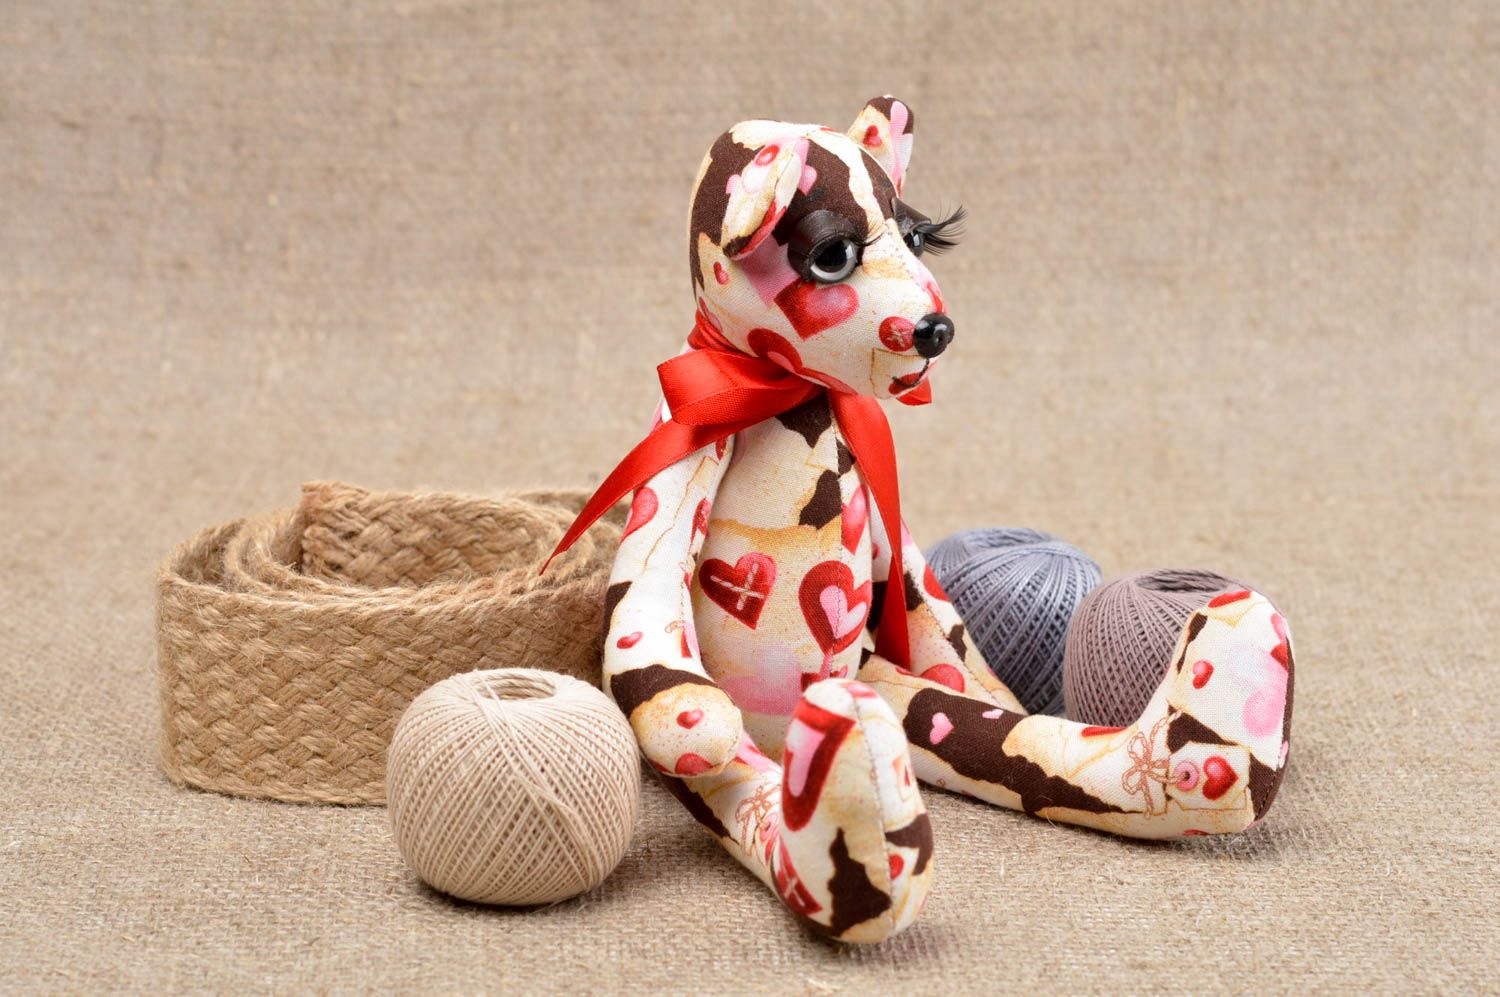 Handmade toy animal toy for children nursery decor ideas soft toy for kids photo 1